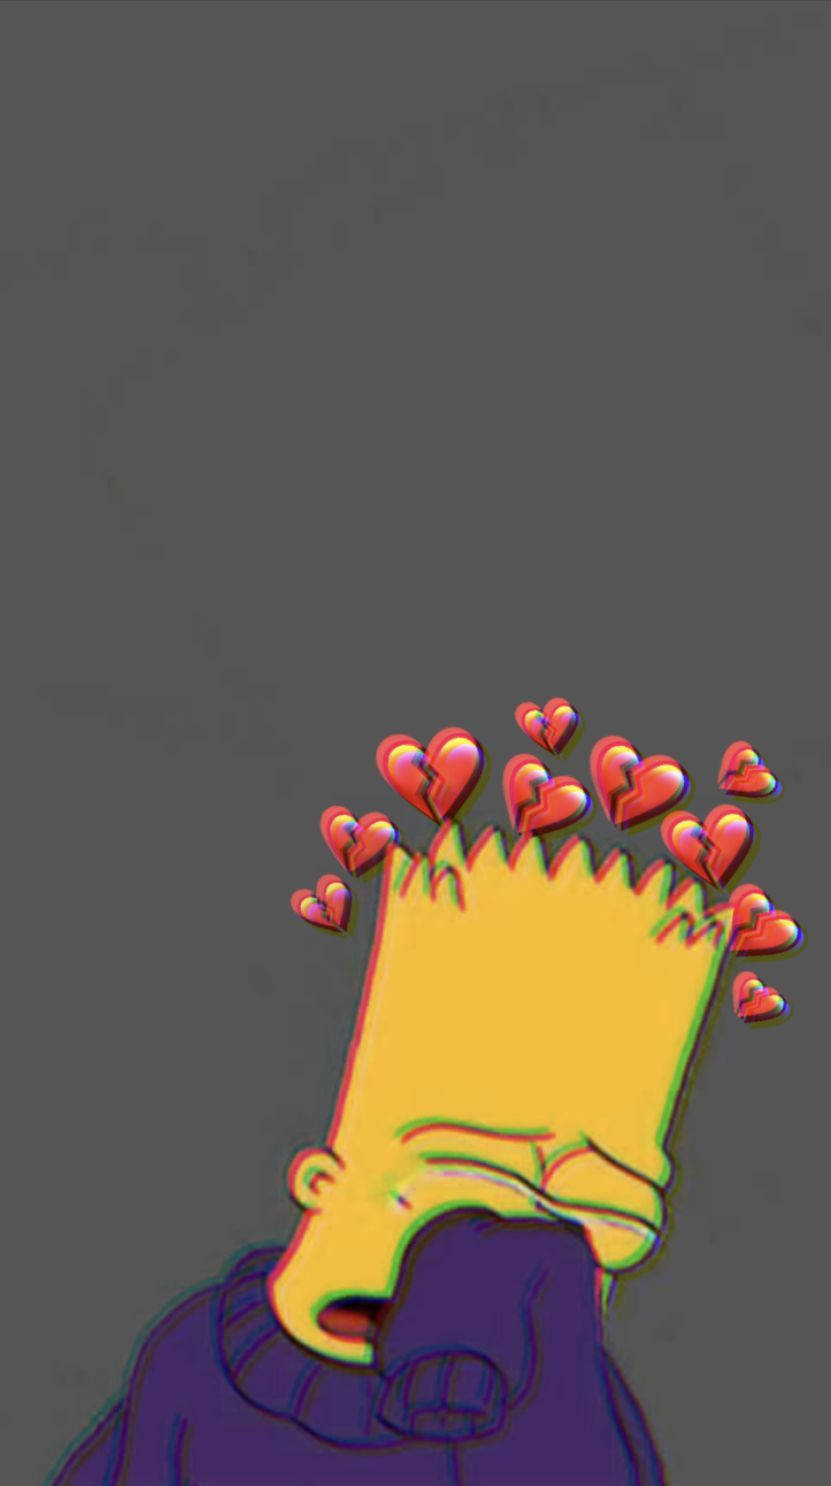 Bart Simpson With A Broken Heart Iphone Wallpaper